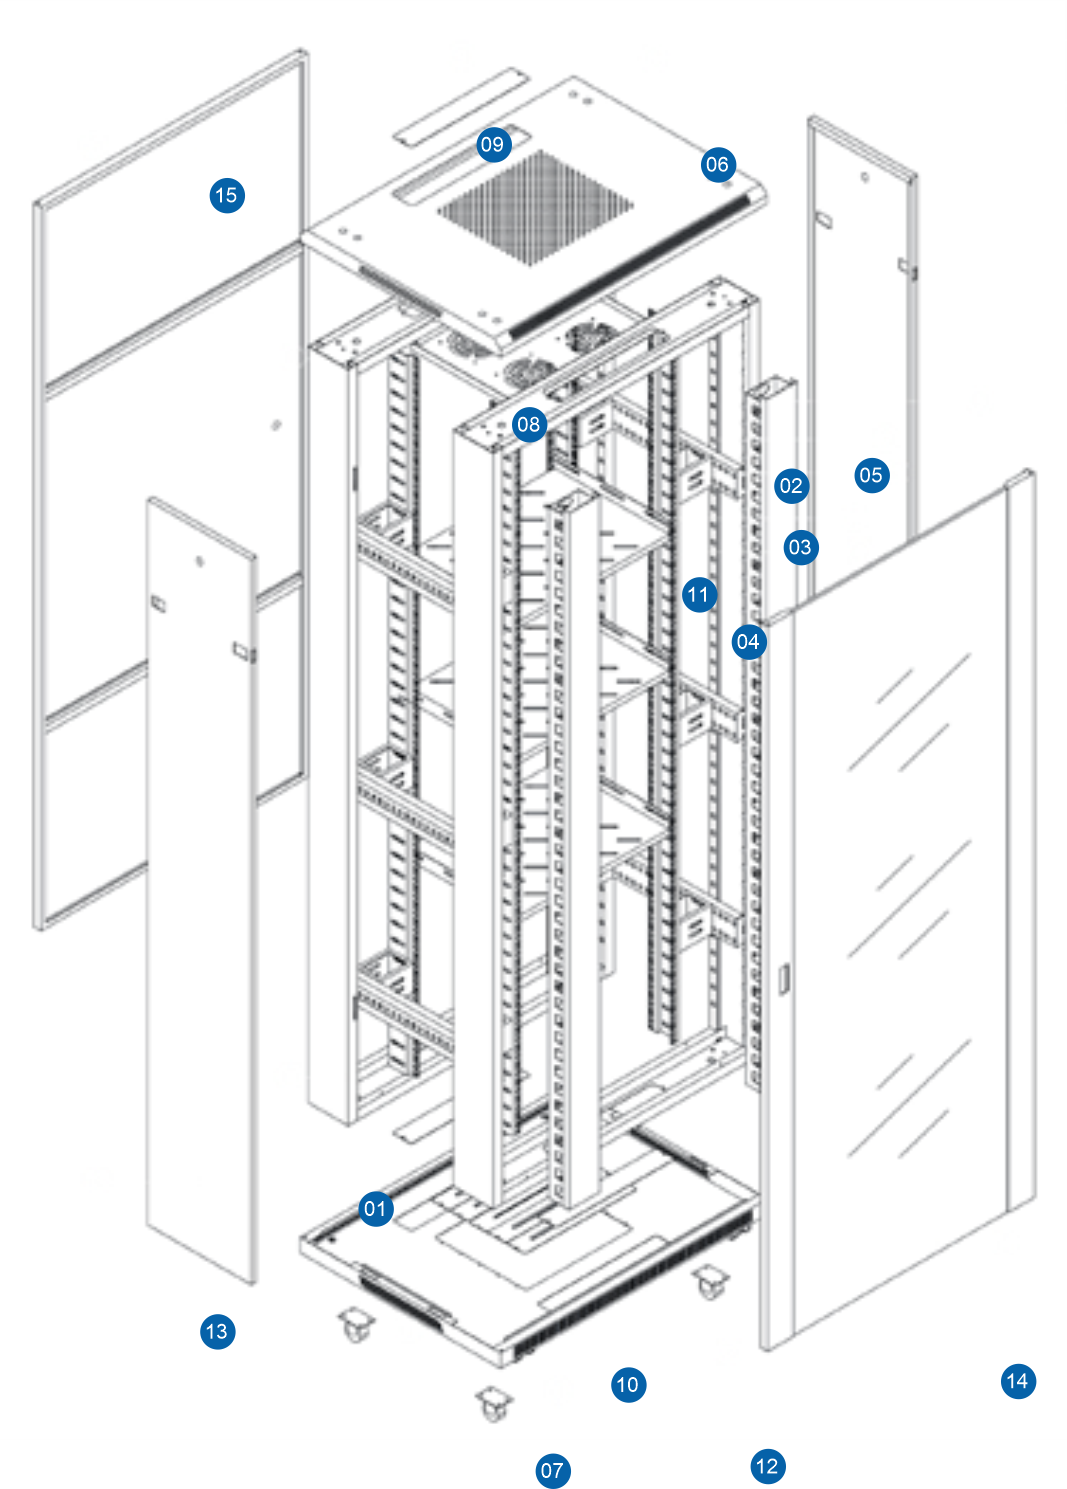 IDC07 server cabinet structure